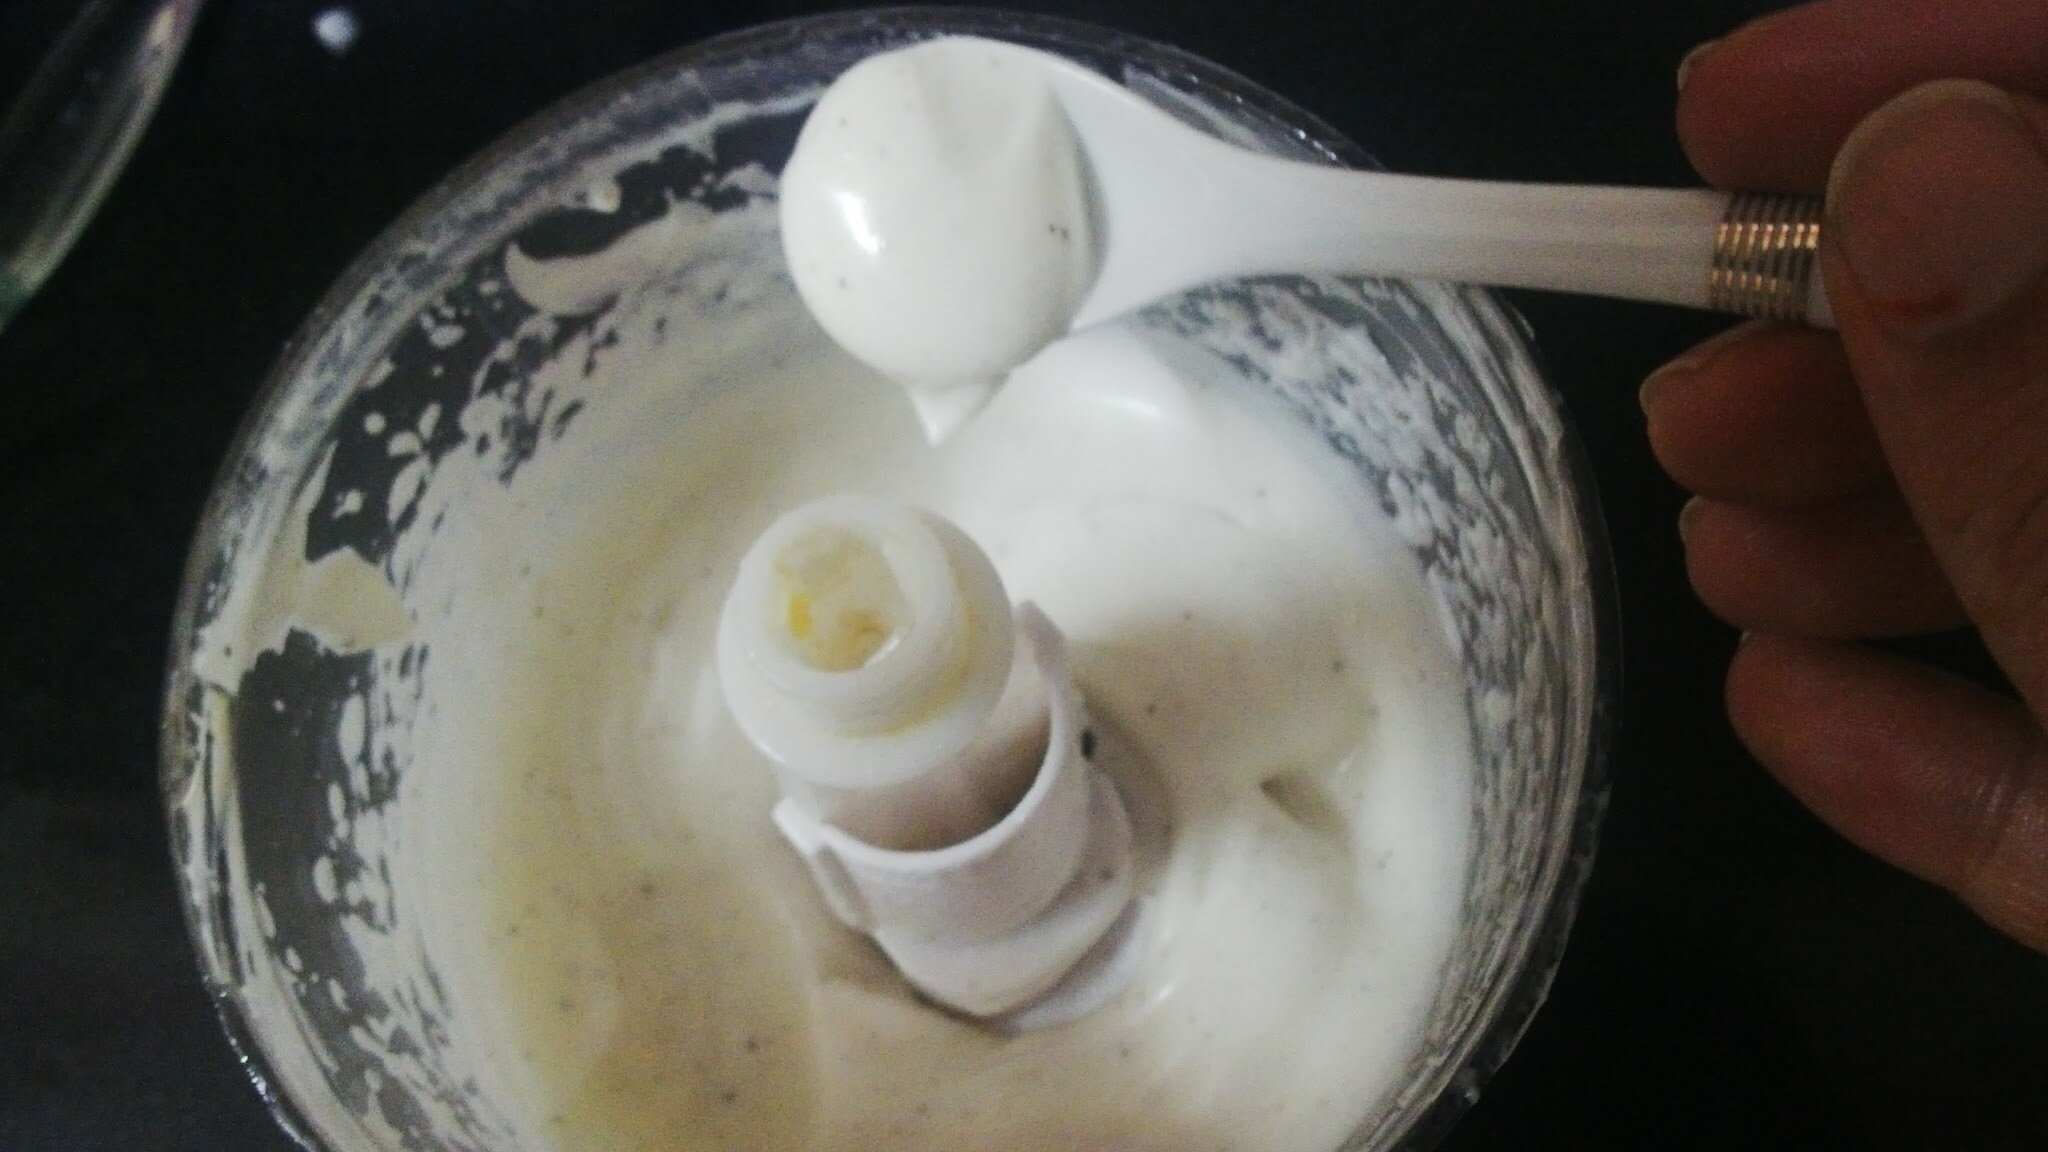 Perfect mayonnaise consistency.